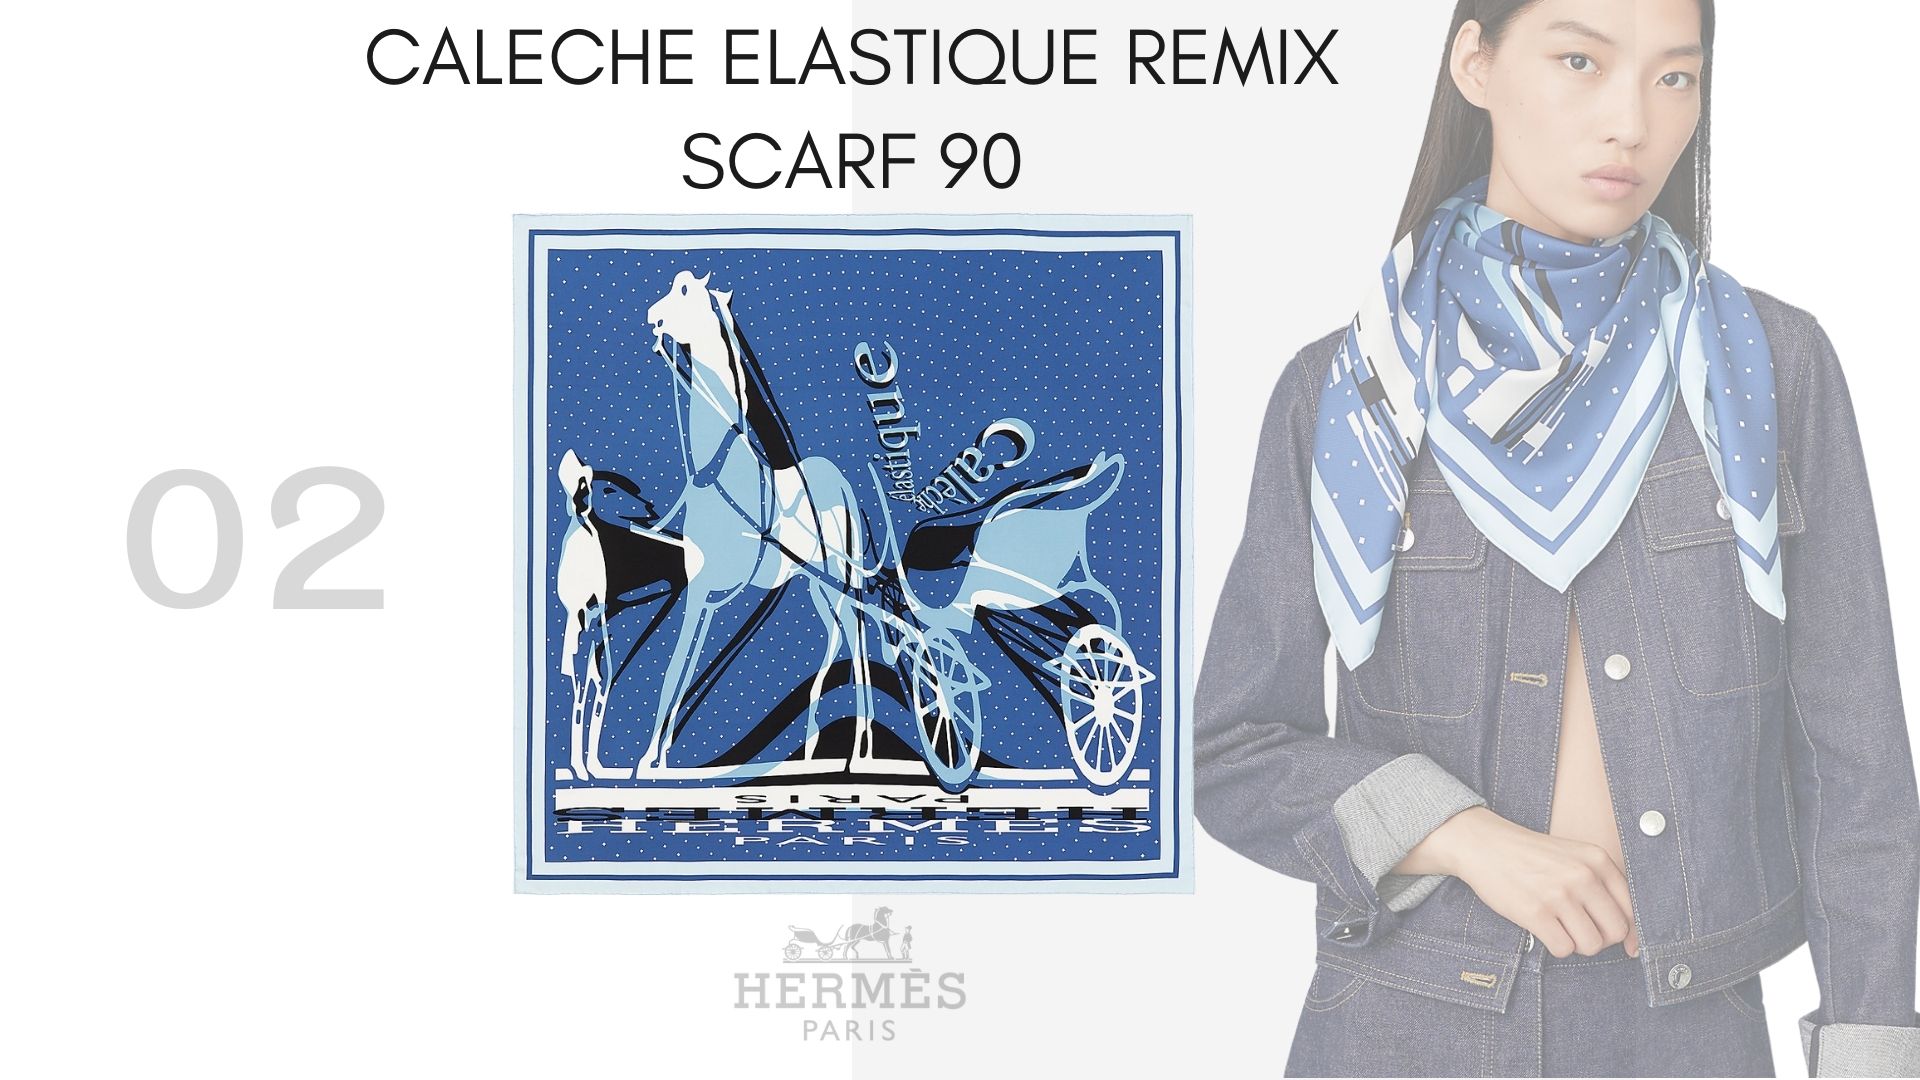 Caleche Elastique Remix scarf 90